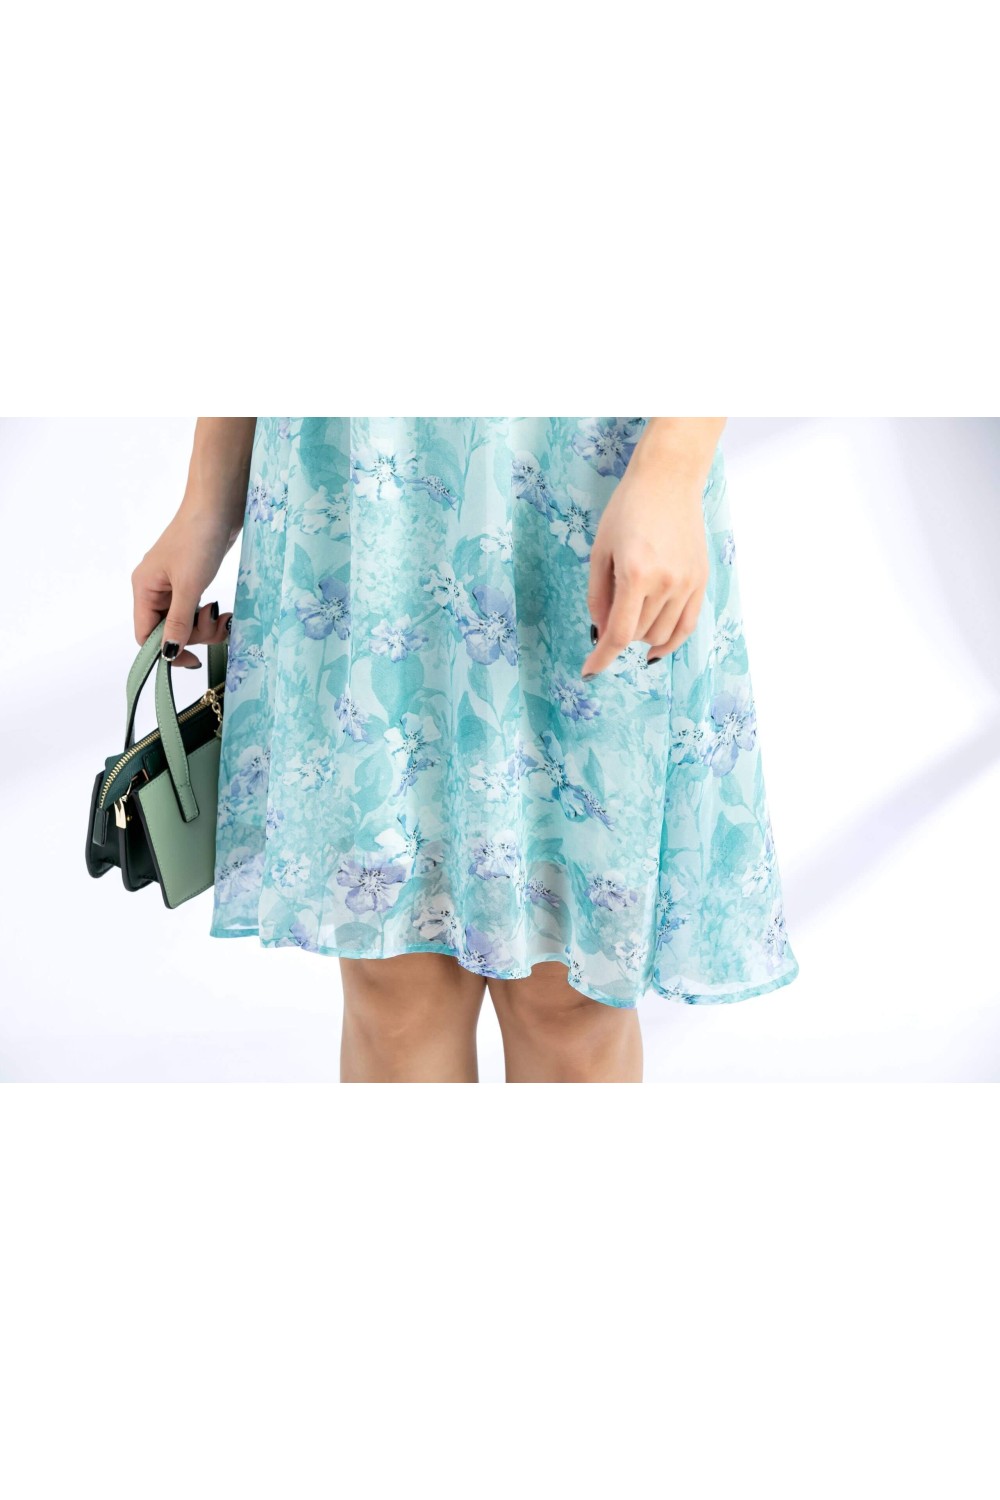 Chiffon Floral Mid-Sleeved Dress